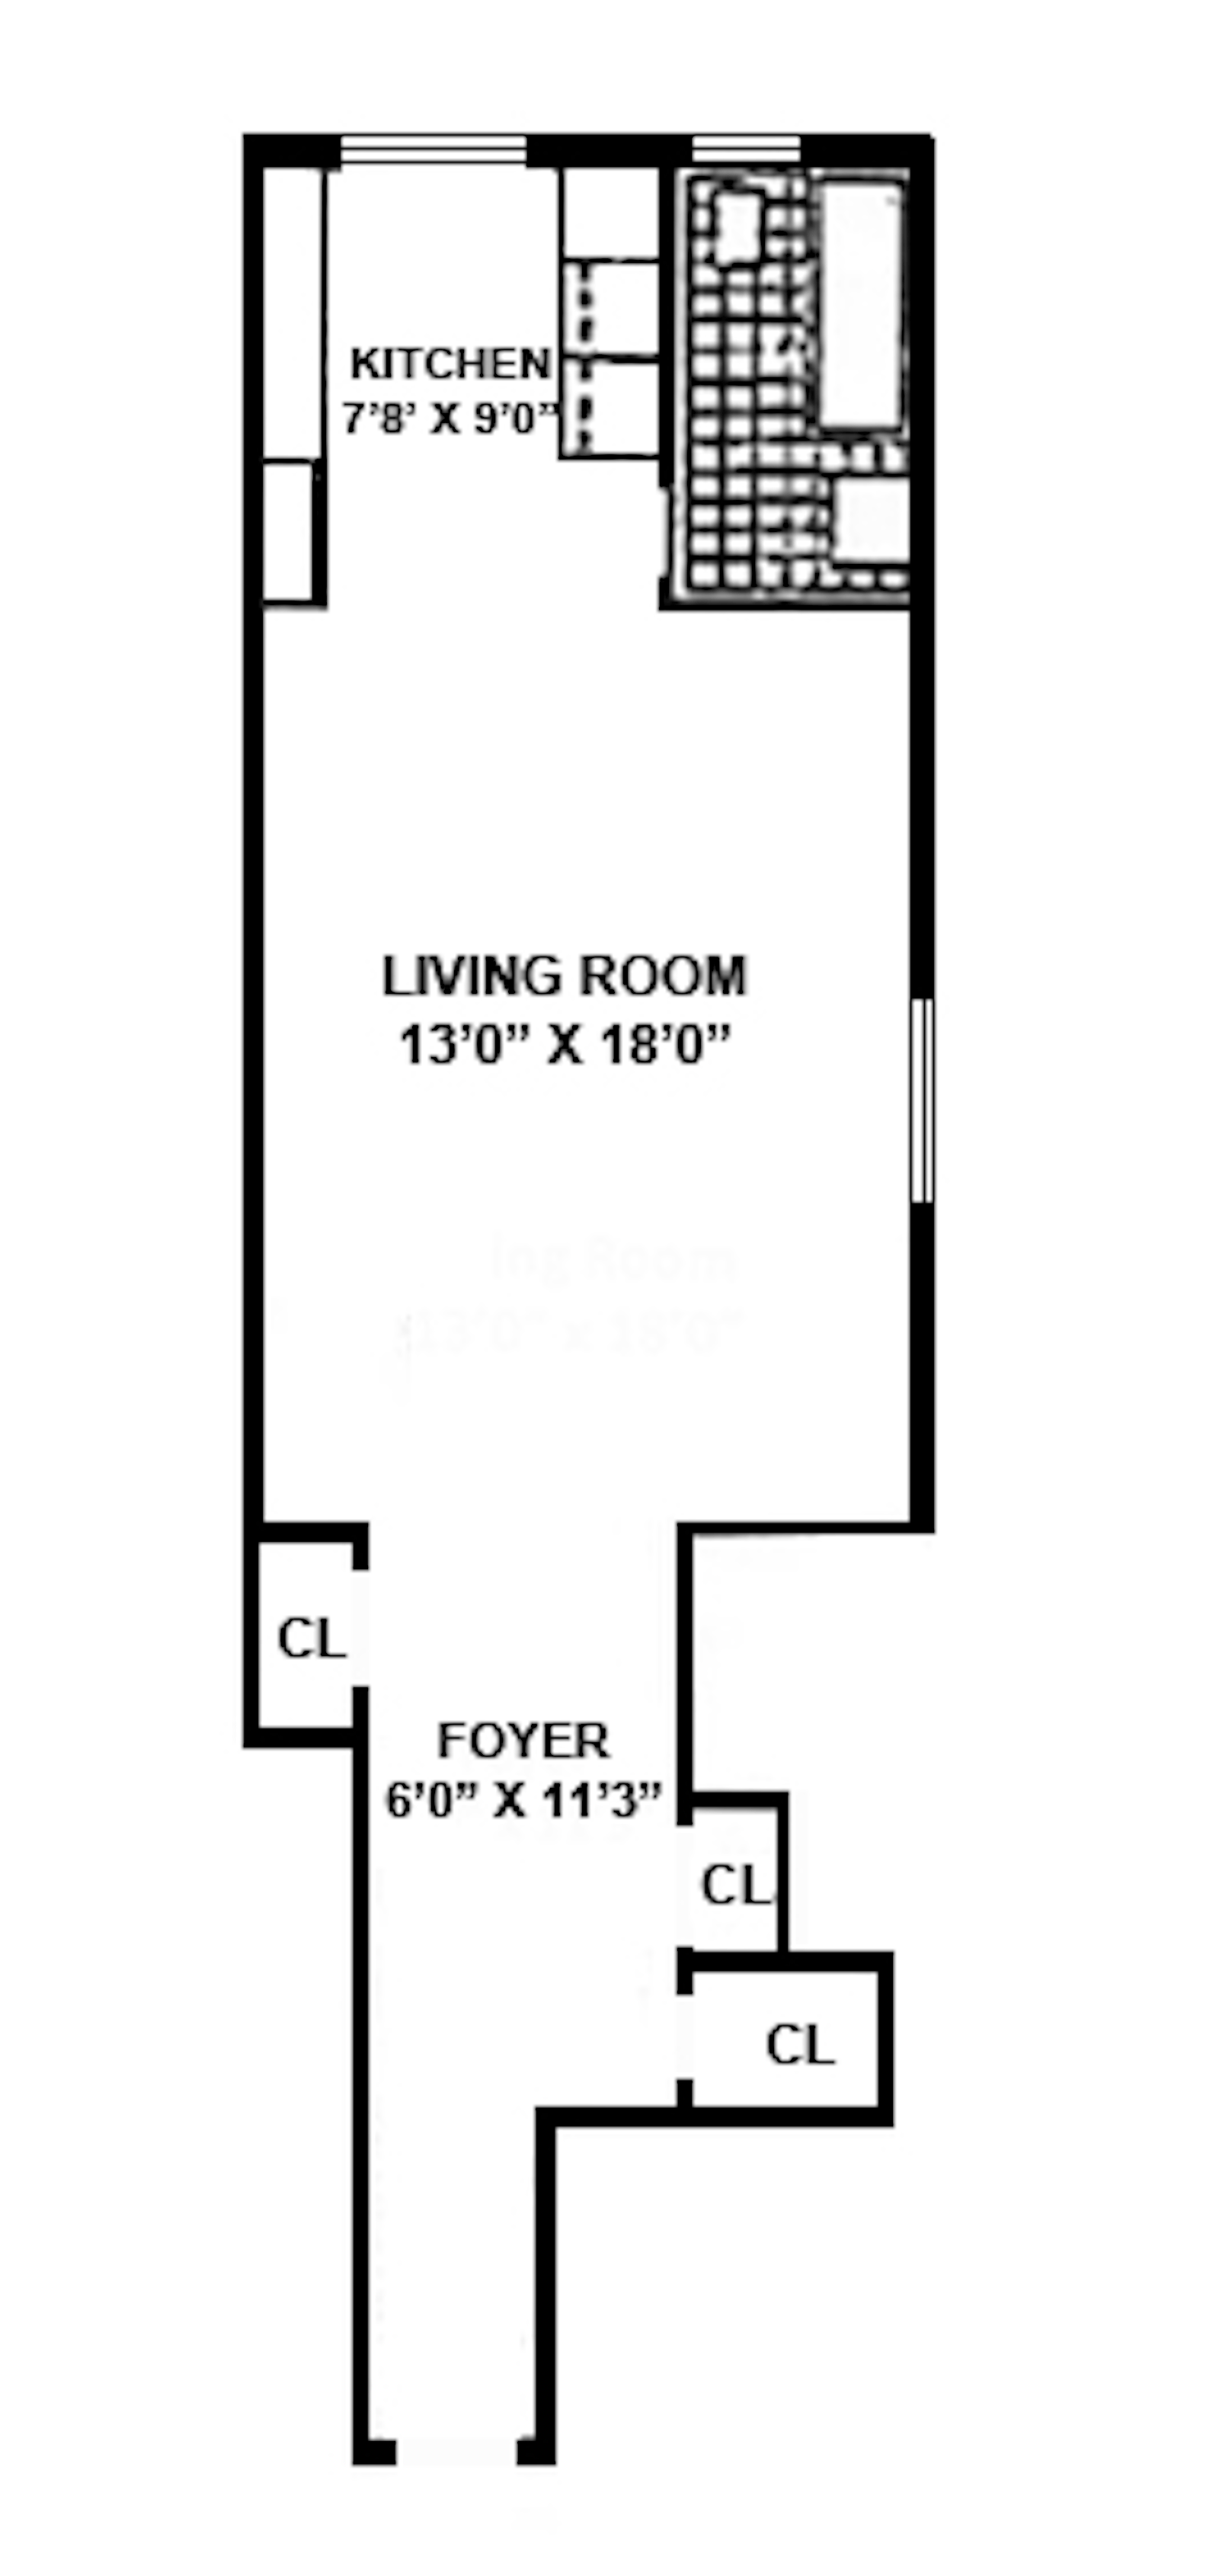 Floorplan for 349 East 49th Street